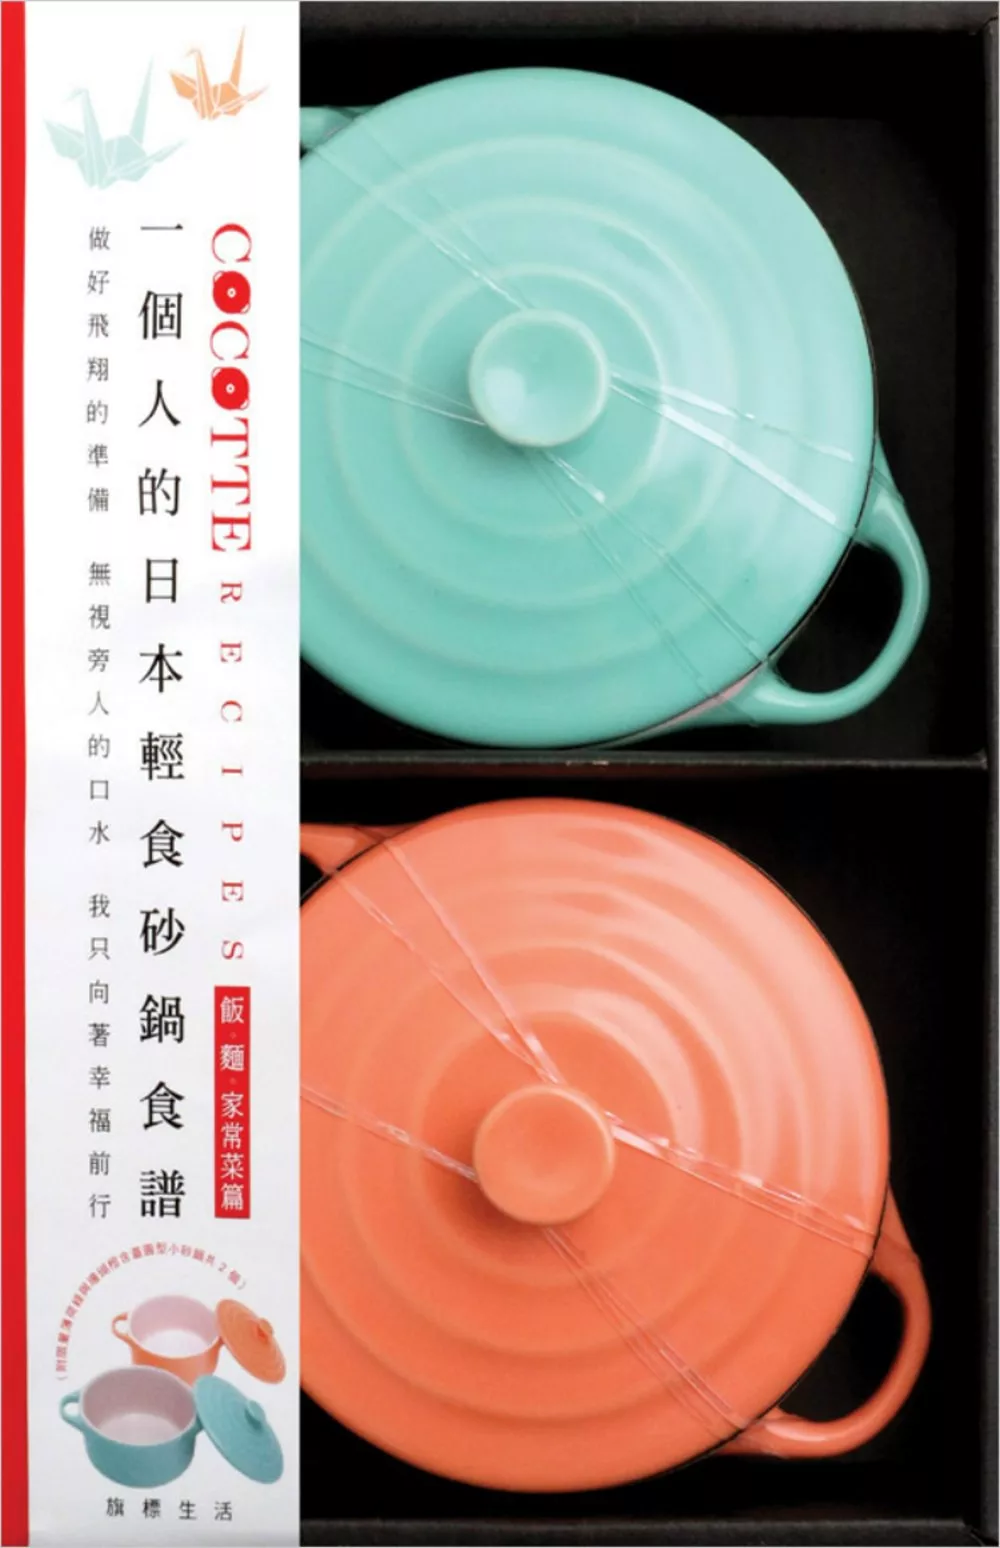 COCOTTE RECIPES 一個人的日本輕食砂鍋食譜：飯‧麵‧家常菜篇（附限量青春系薄荷綠與珊瑚橙含蓋圓型小砂鍋共2個）